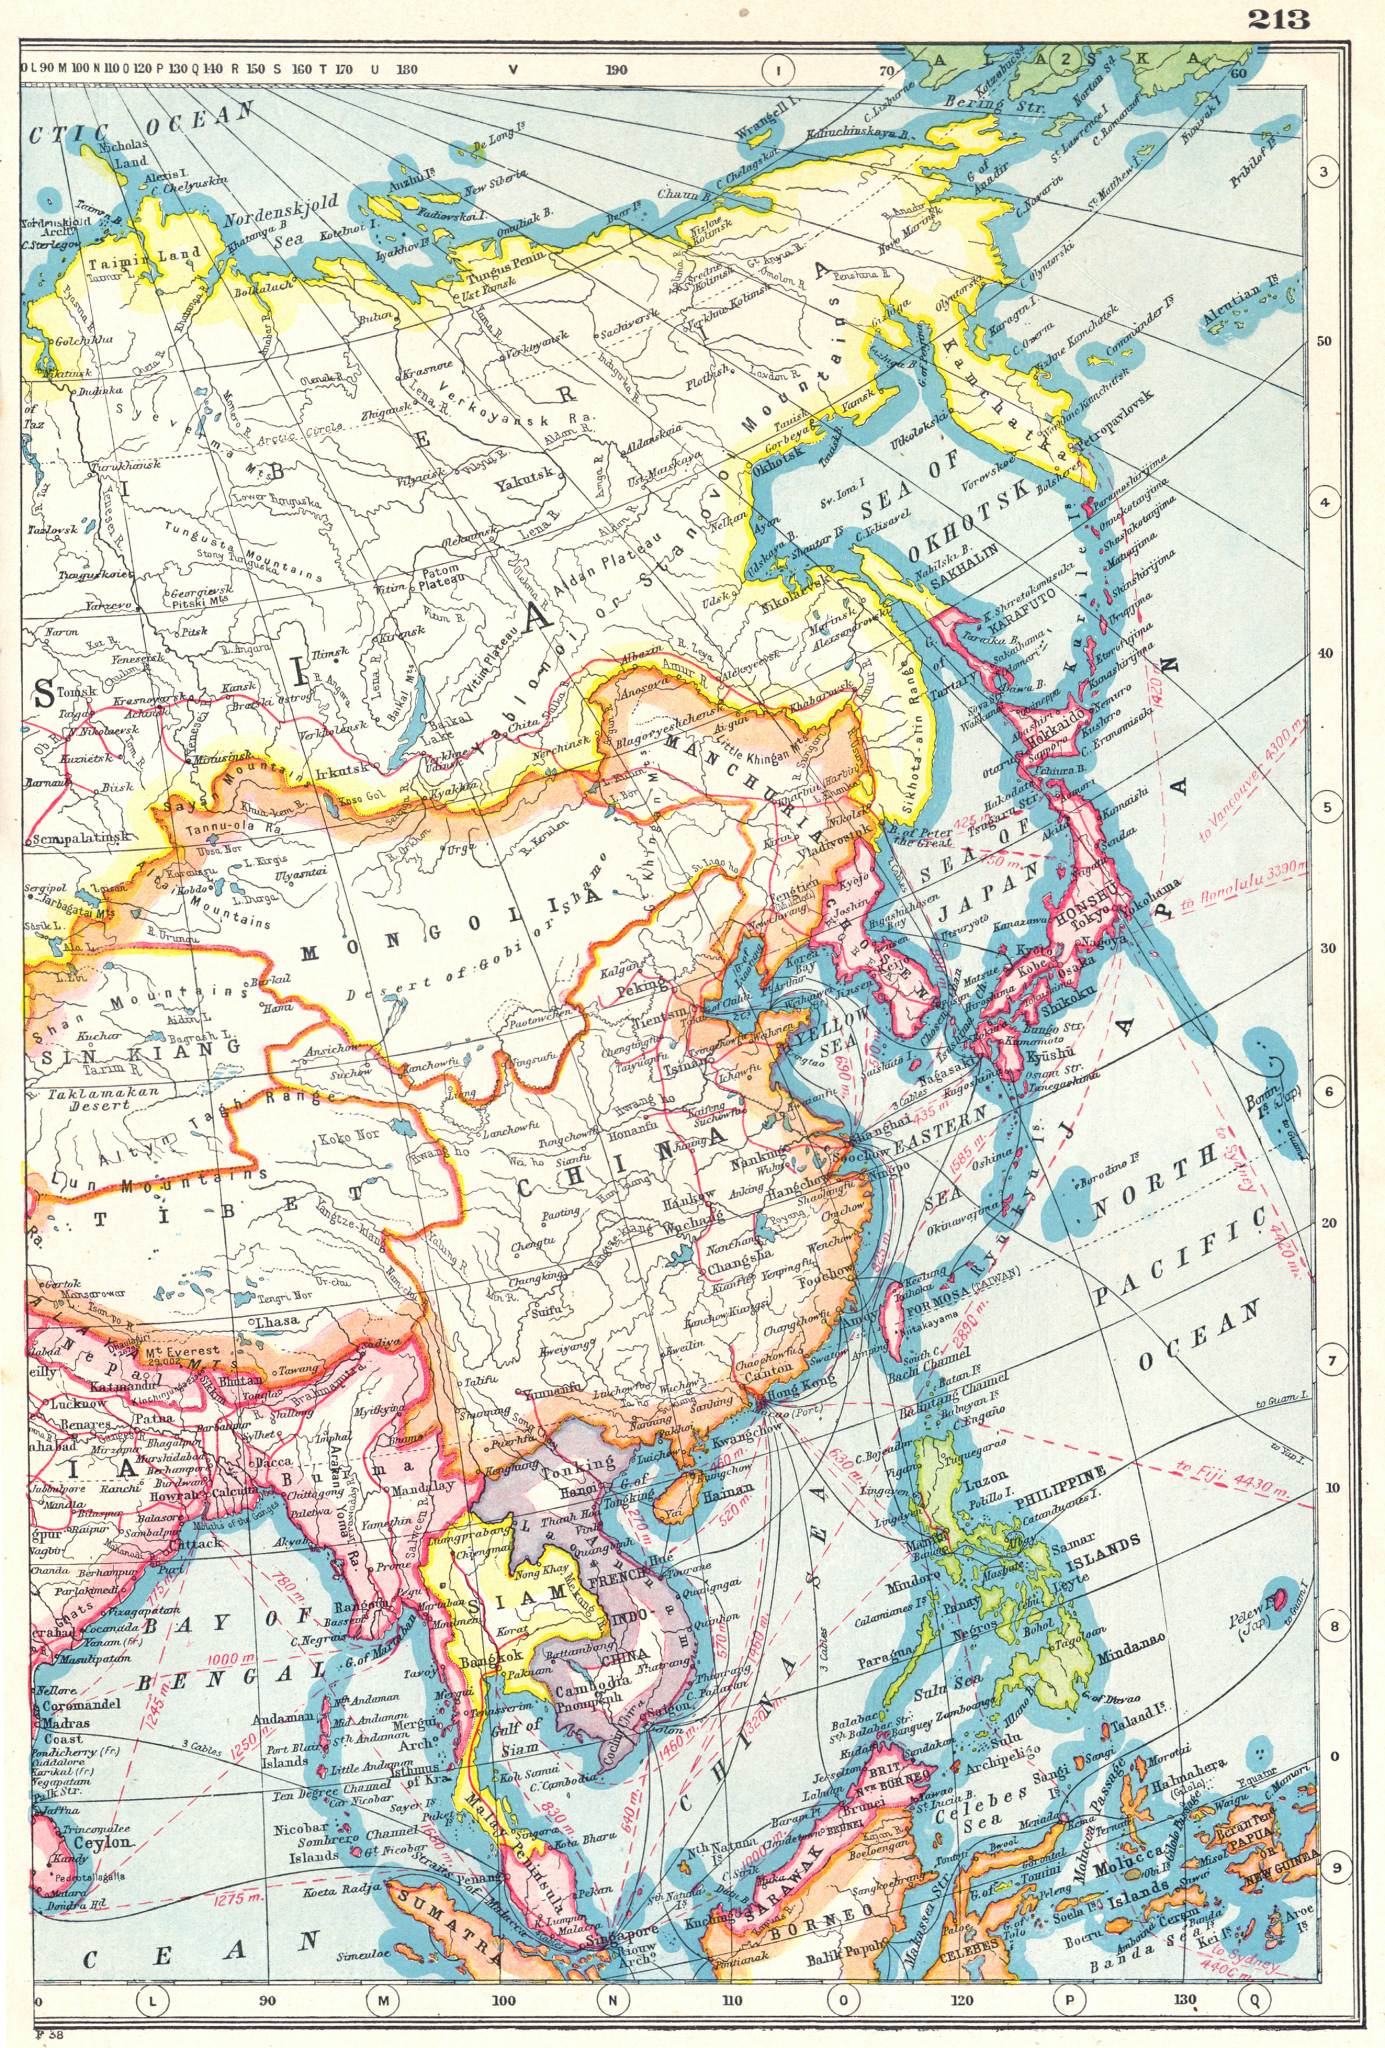 Associate Product EAST ASIA. China Philippines Japan Korea Siam French Indochina Malaya 1920 map